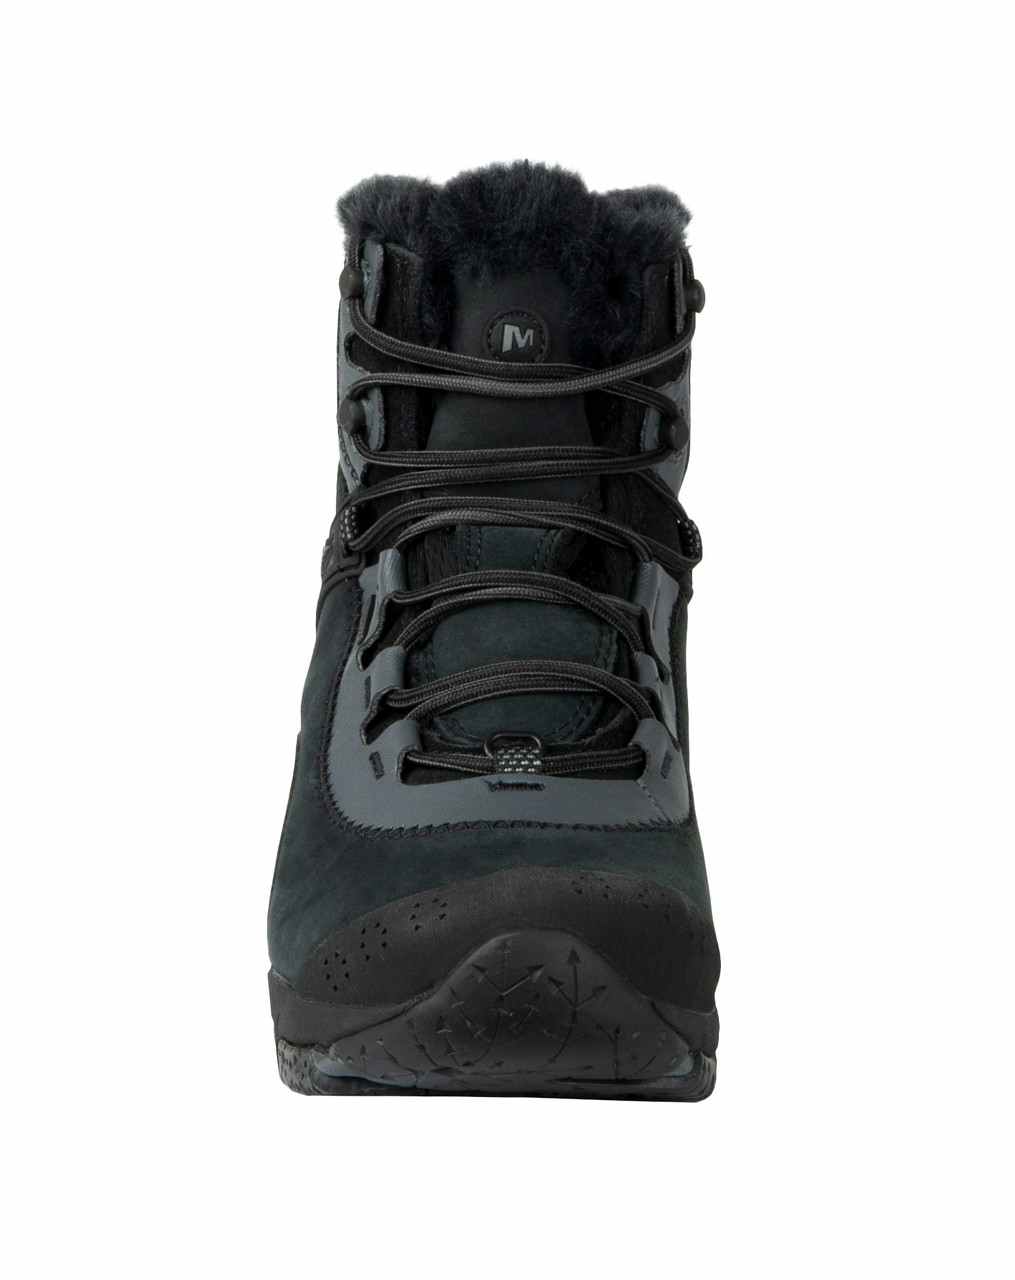 Thermo Arc II 8 Waterproof Winter Boots Black